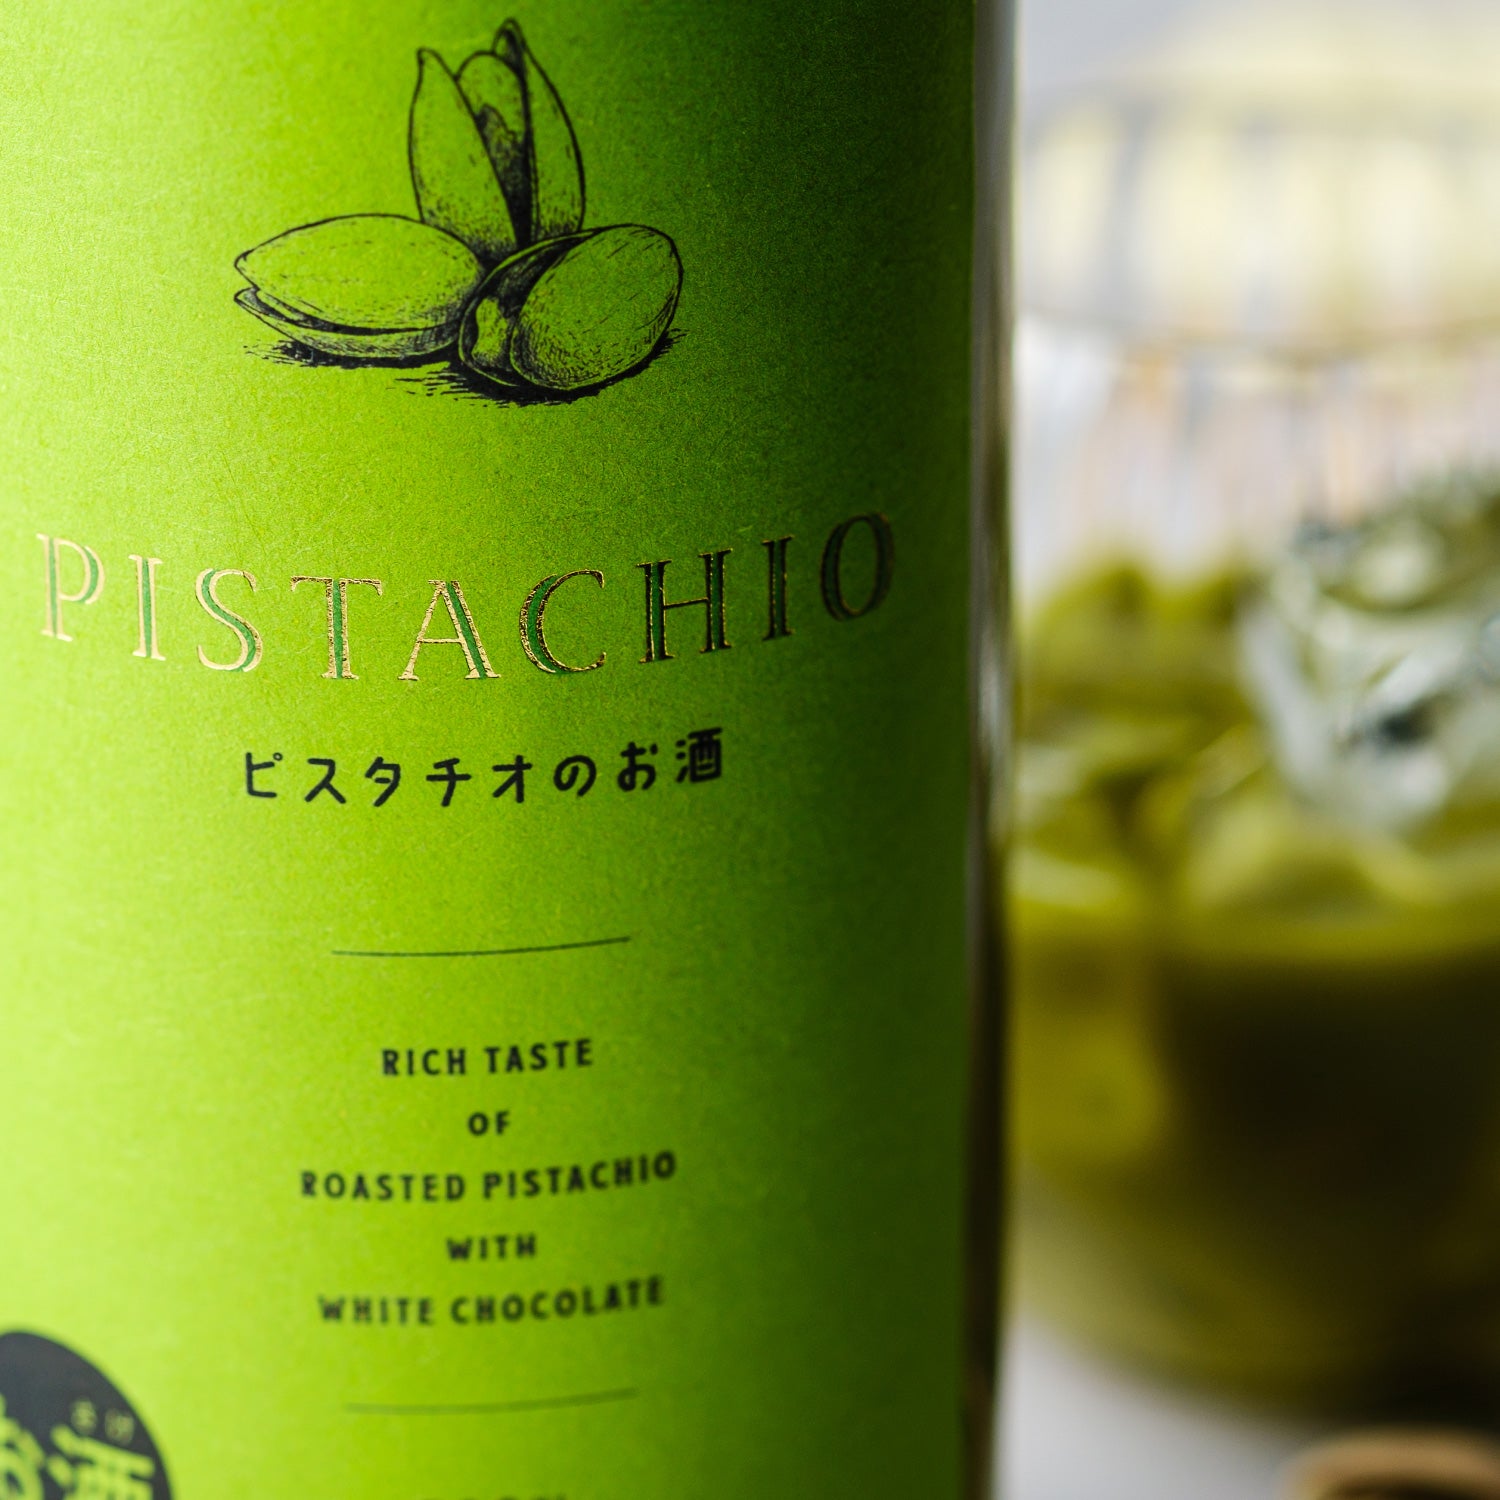 PISTACHIO -ピスタチオのお酒-